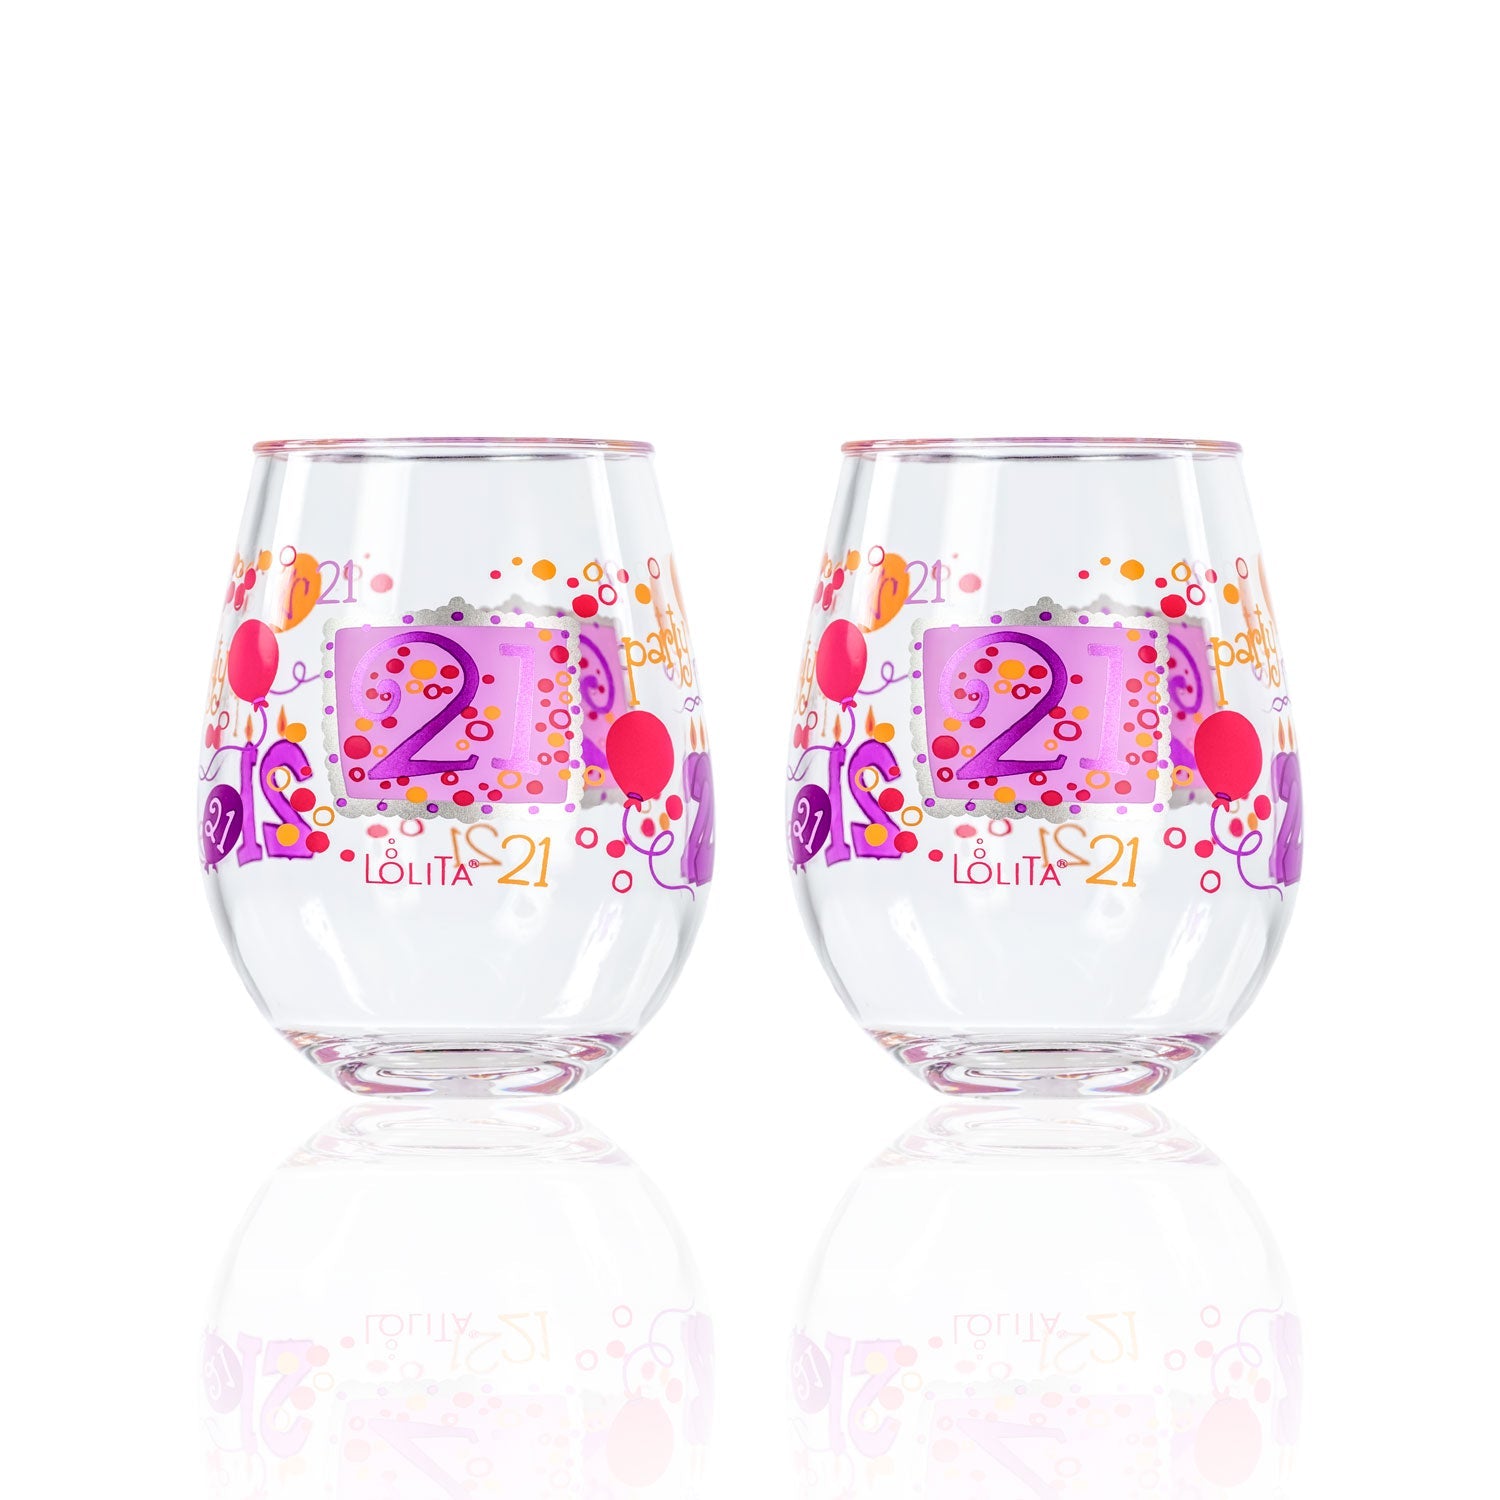 Lolita 21st Birthday Party to go 15oz Acrylic Stemless Wine Glasses set of 2